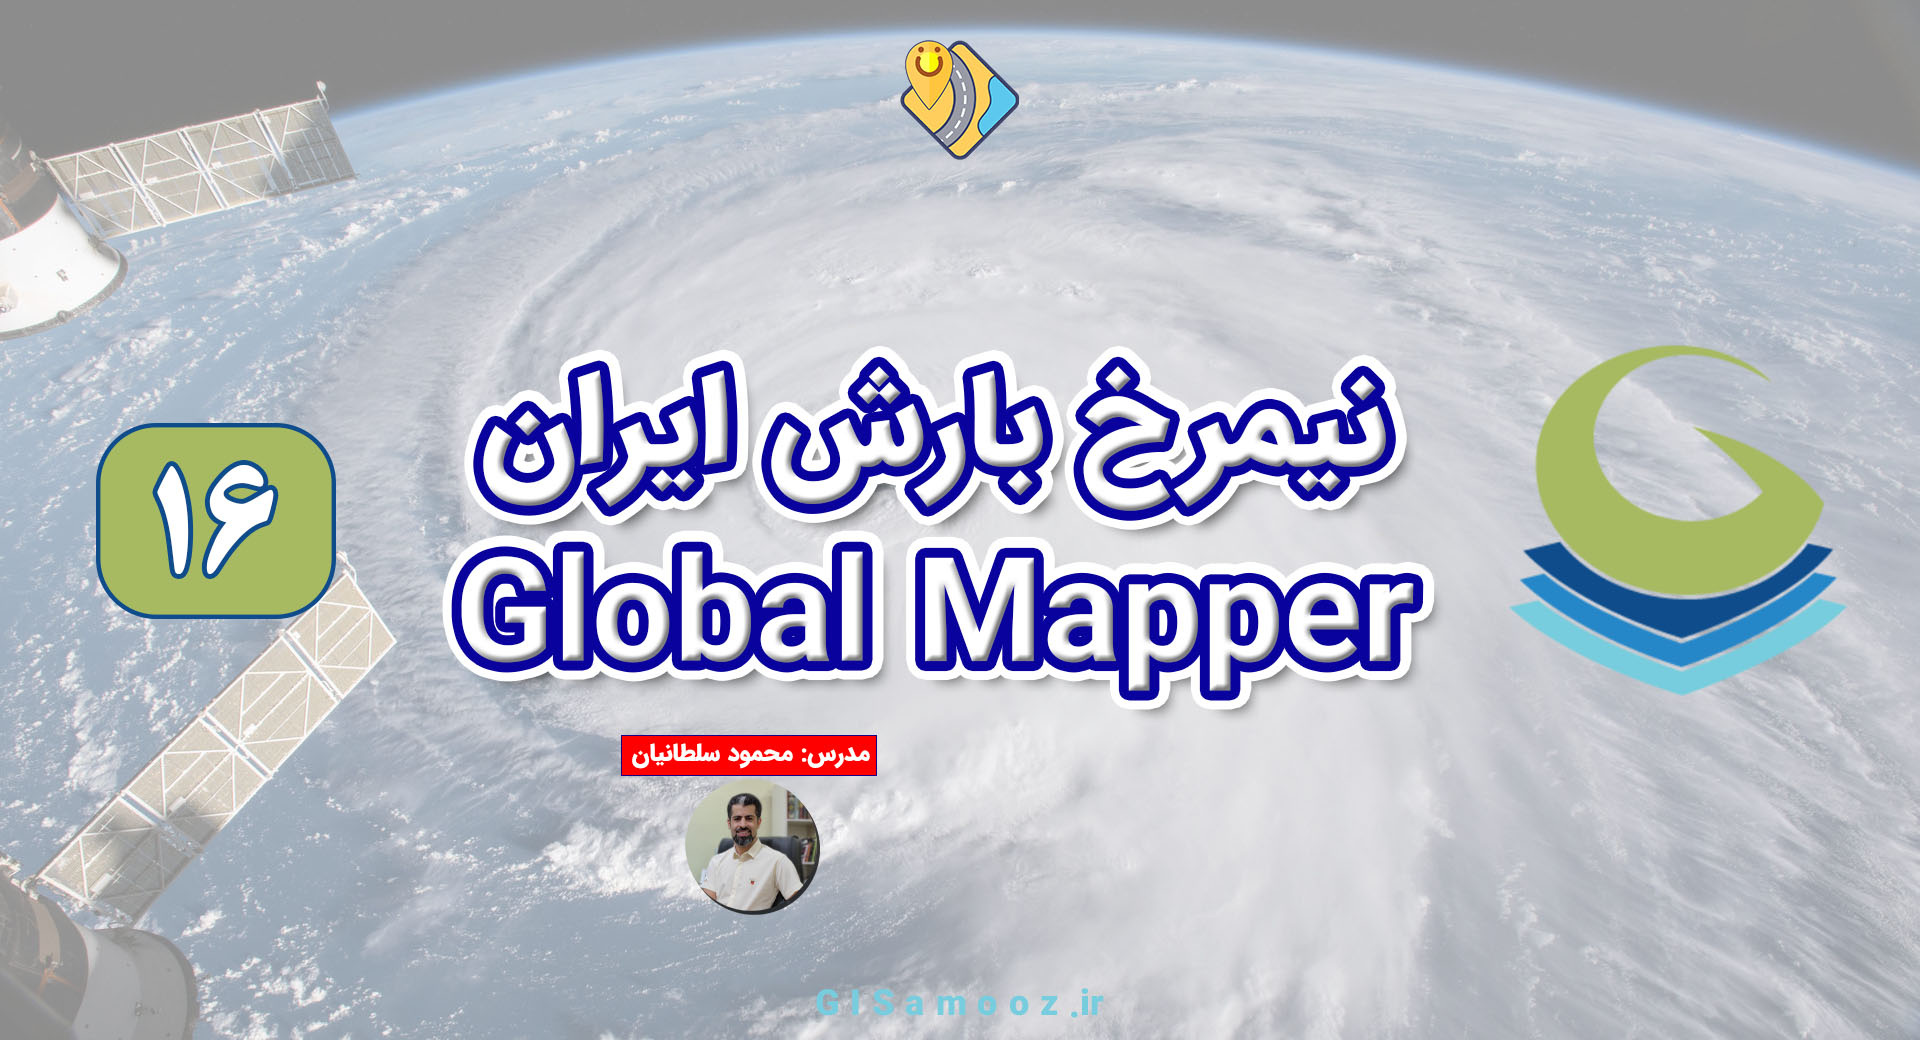 ترسیم پروفیل بارش ایران در گلوبال مپر Global Mapper